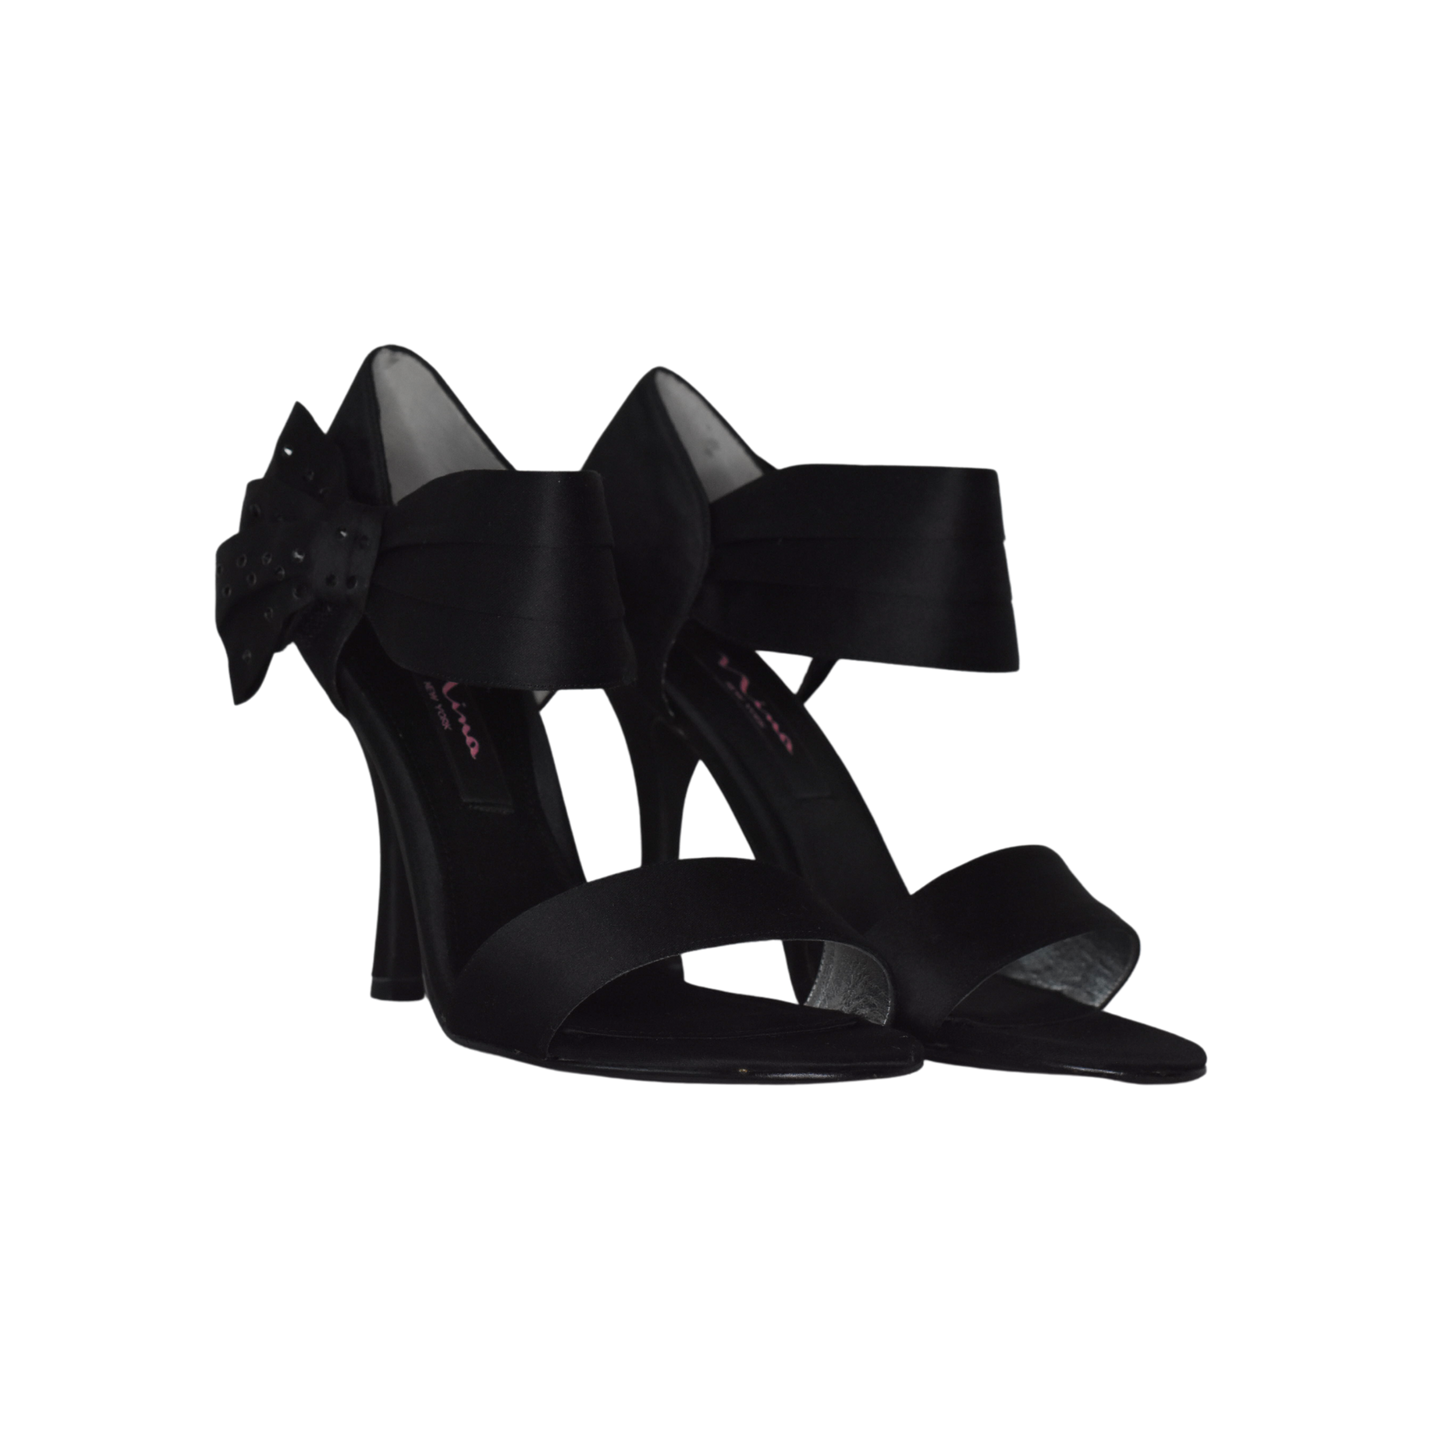 Nina High Heels w Bow & Rhinestone Details Black Size 7 SKU 000277-9